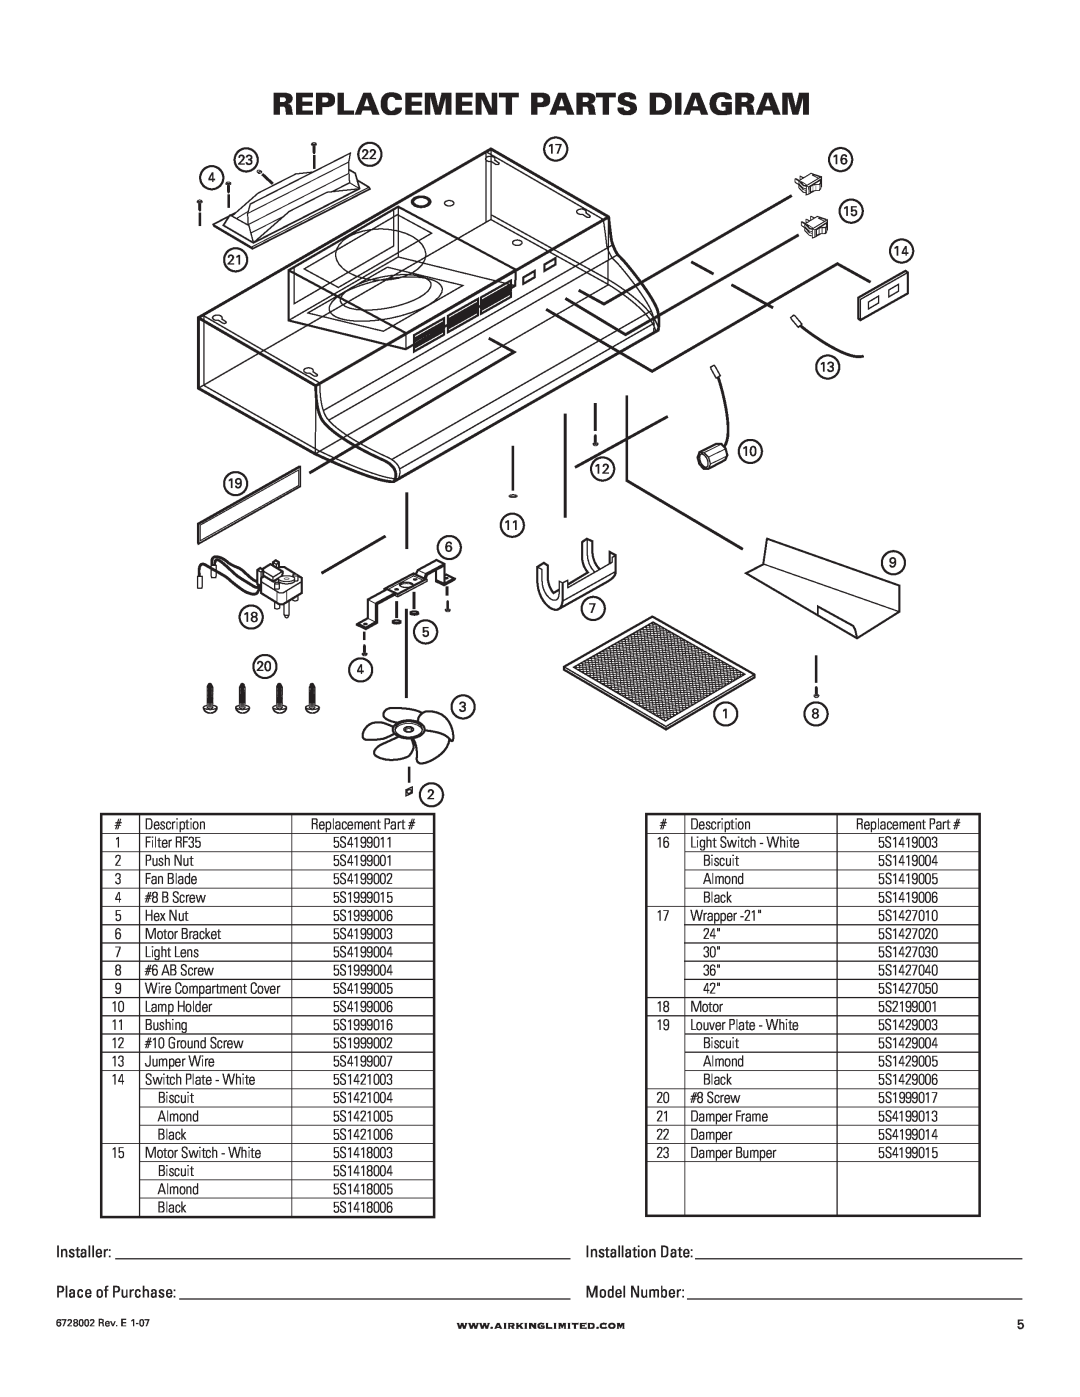 Air King Ventilation Hood manual Replacement Parts Diagram 